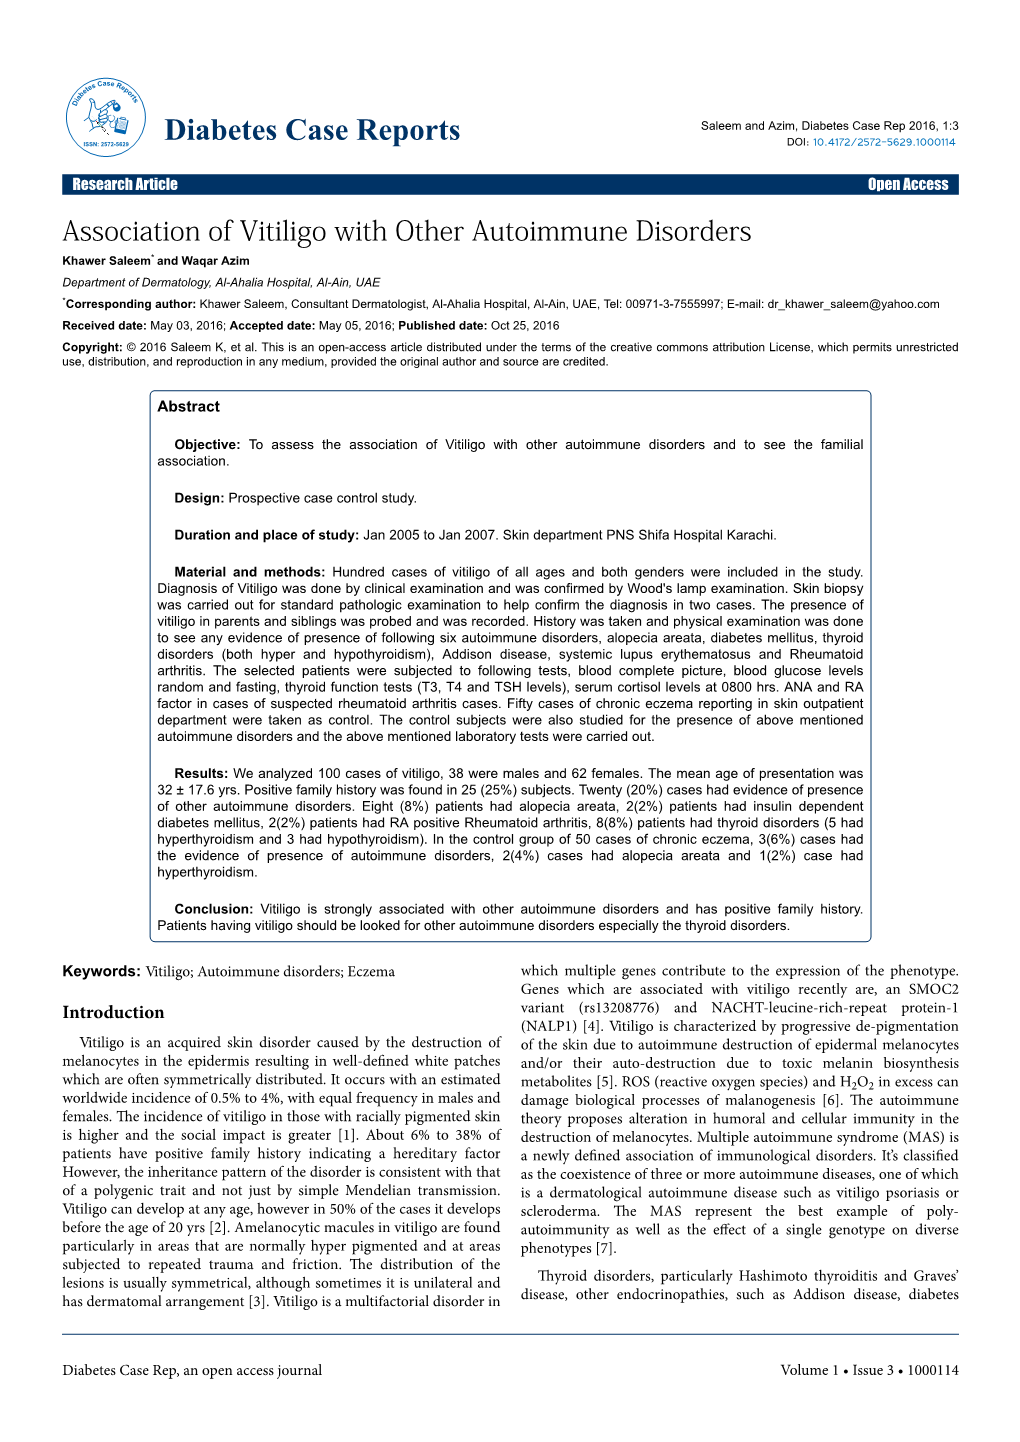 Association of Vitiligo with Other Autoimmune Disorders